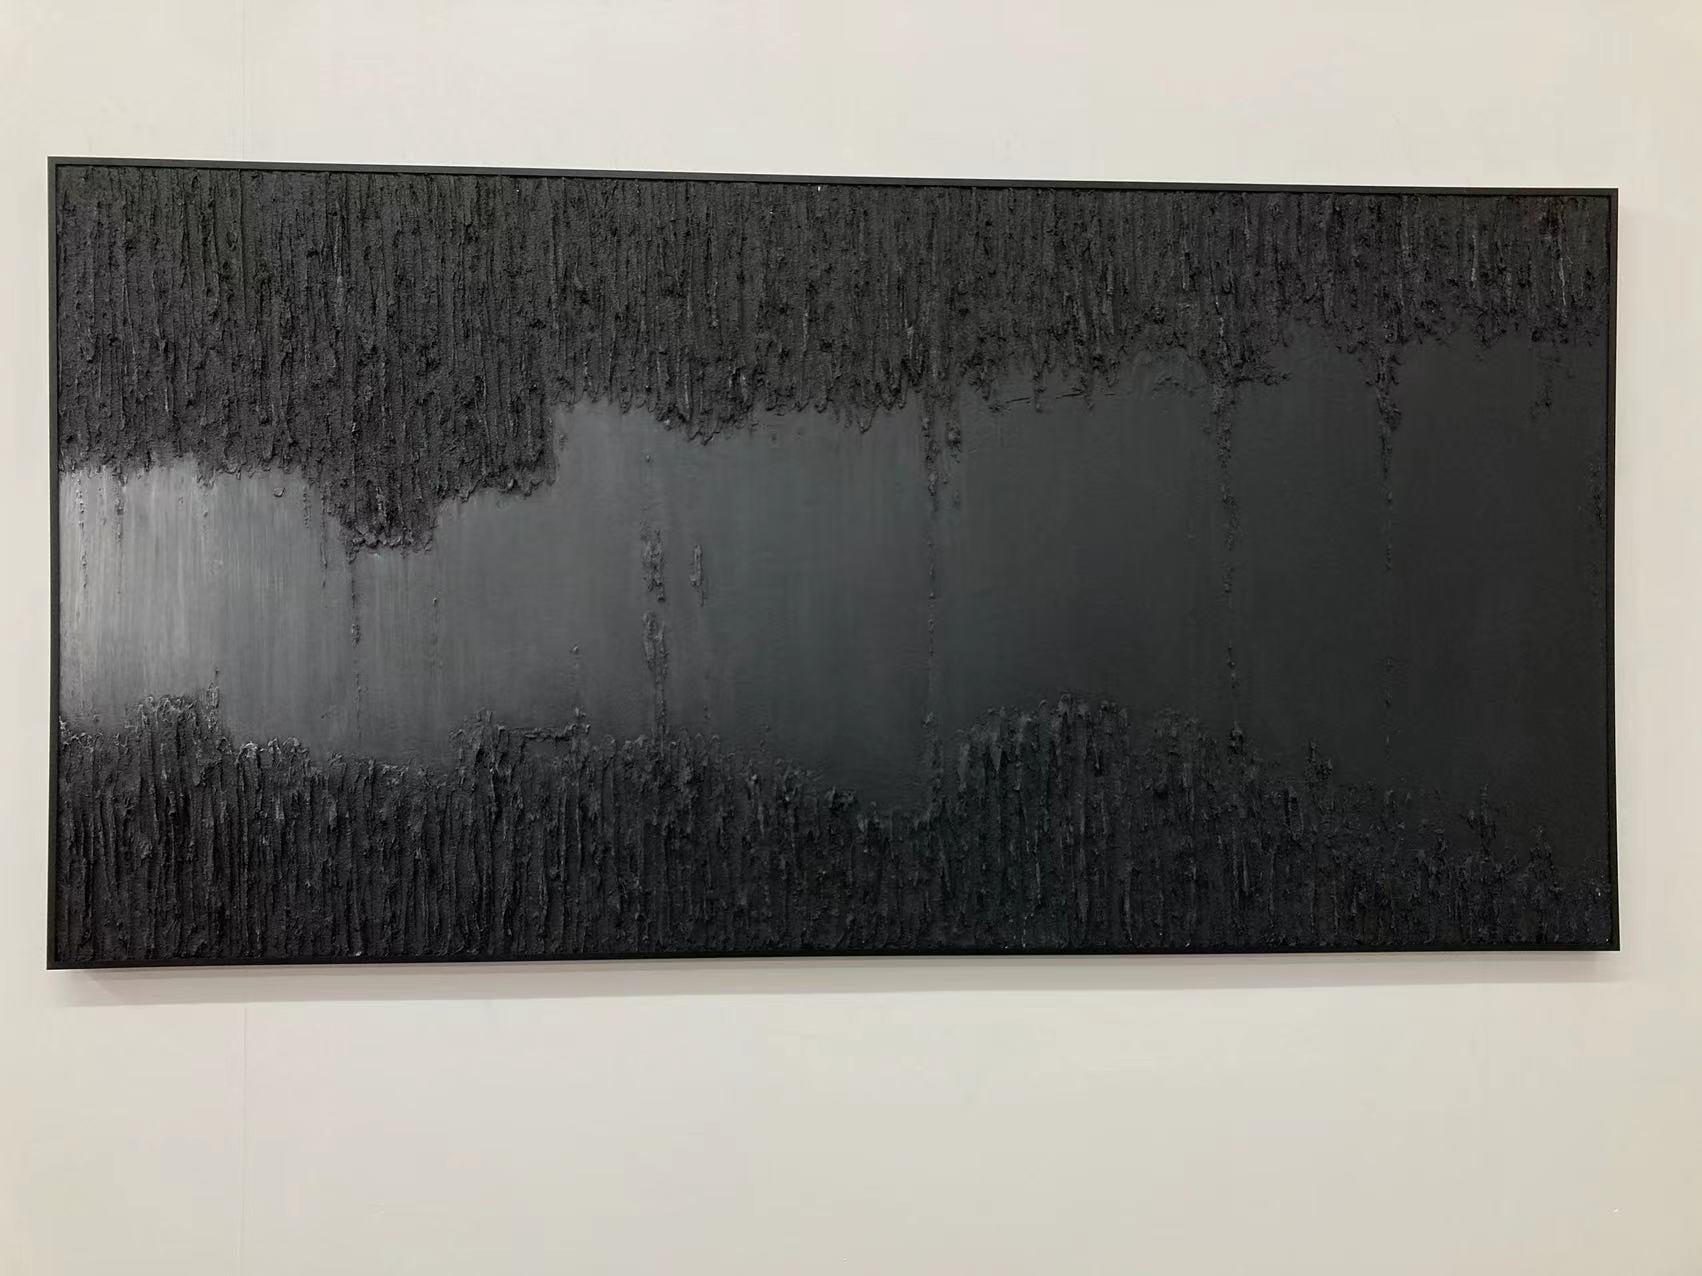 Peinture abstraite noir et blanc #CXA 032